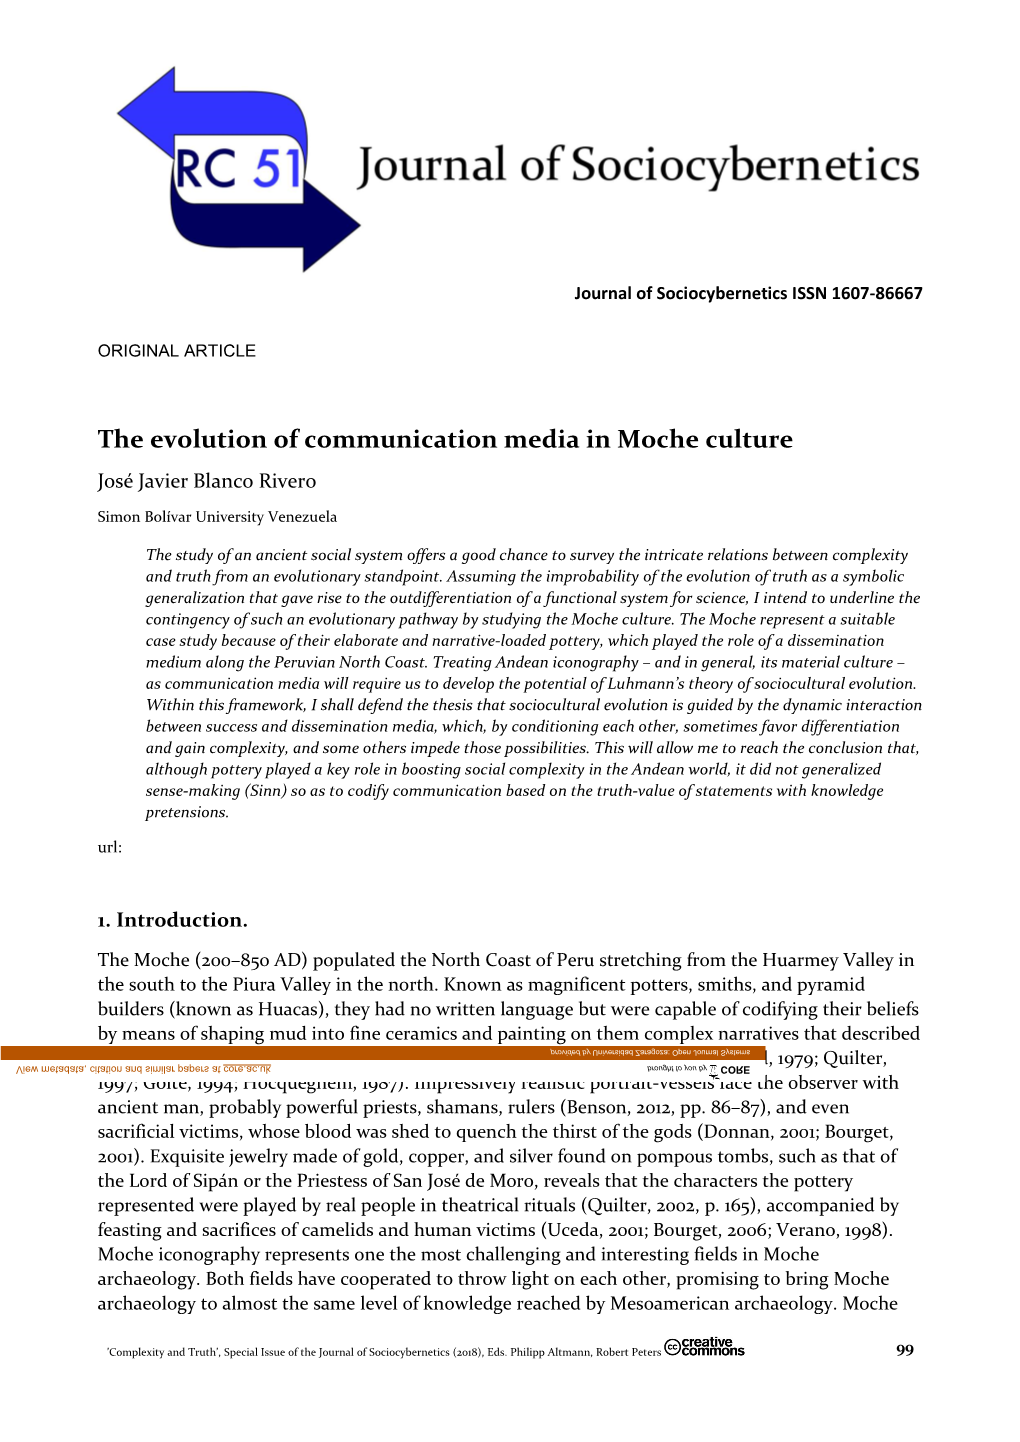 The Evolution of Communication Media in Moche Culture